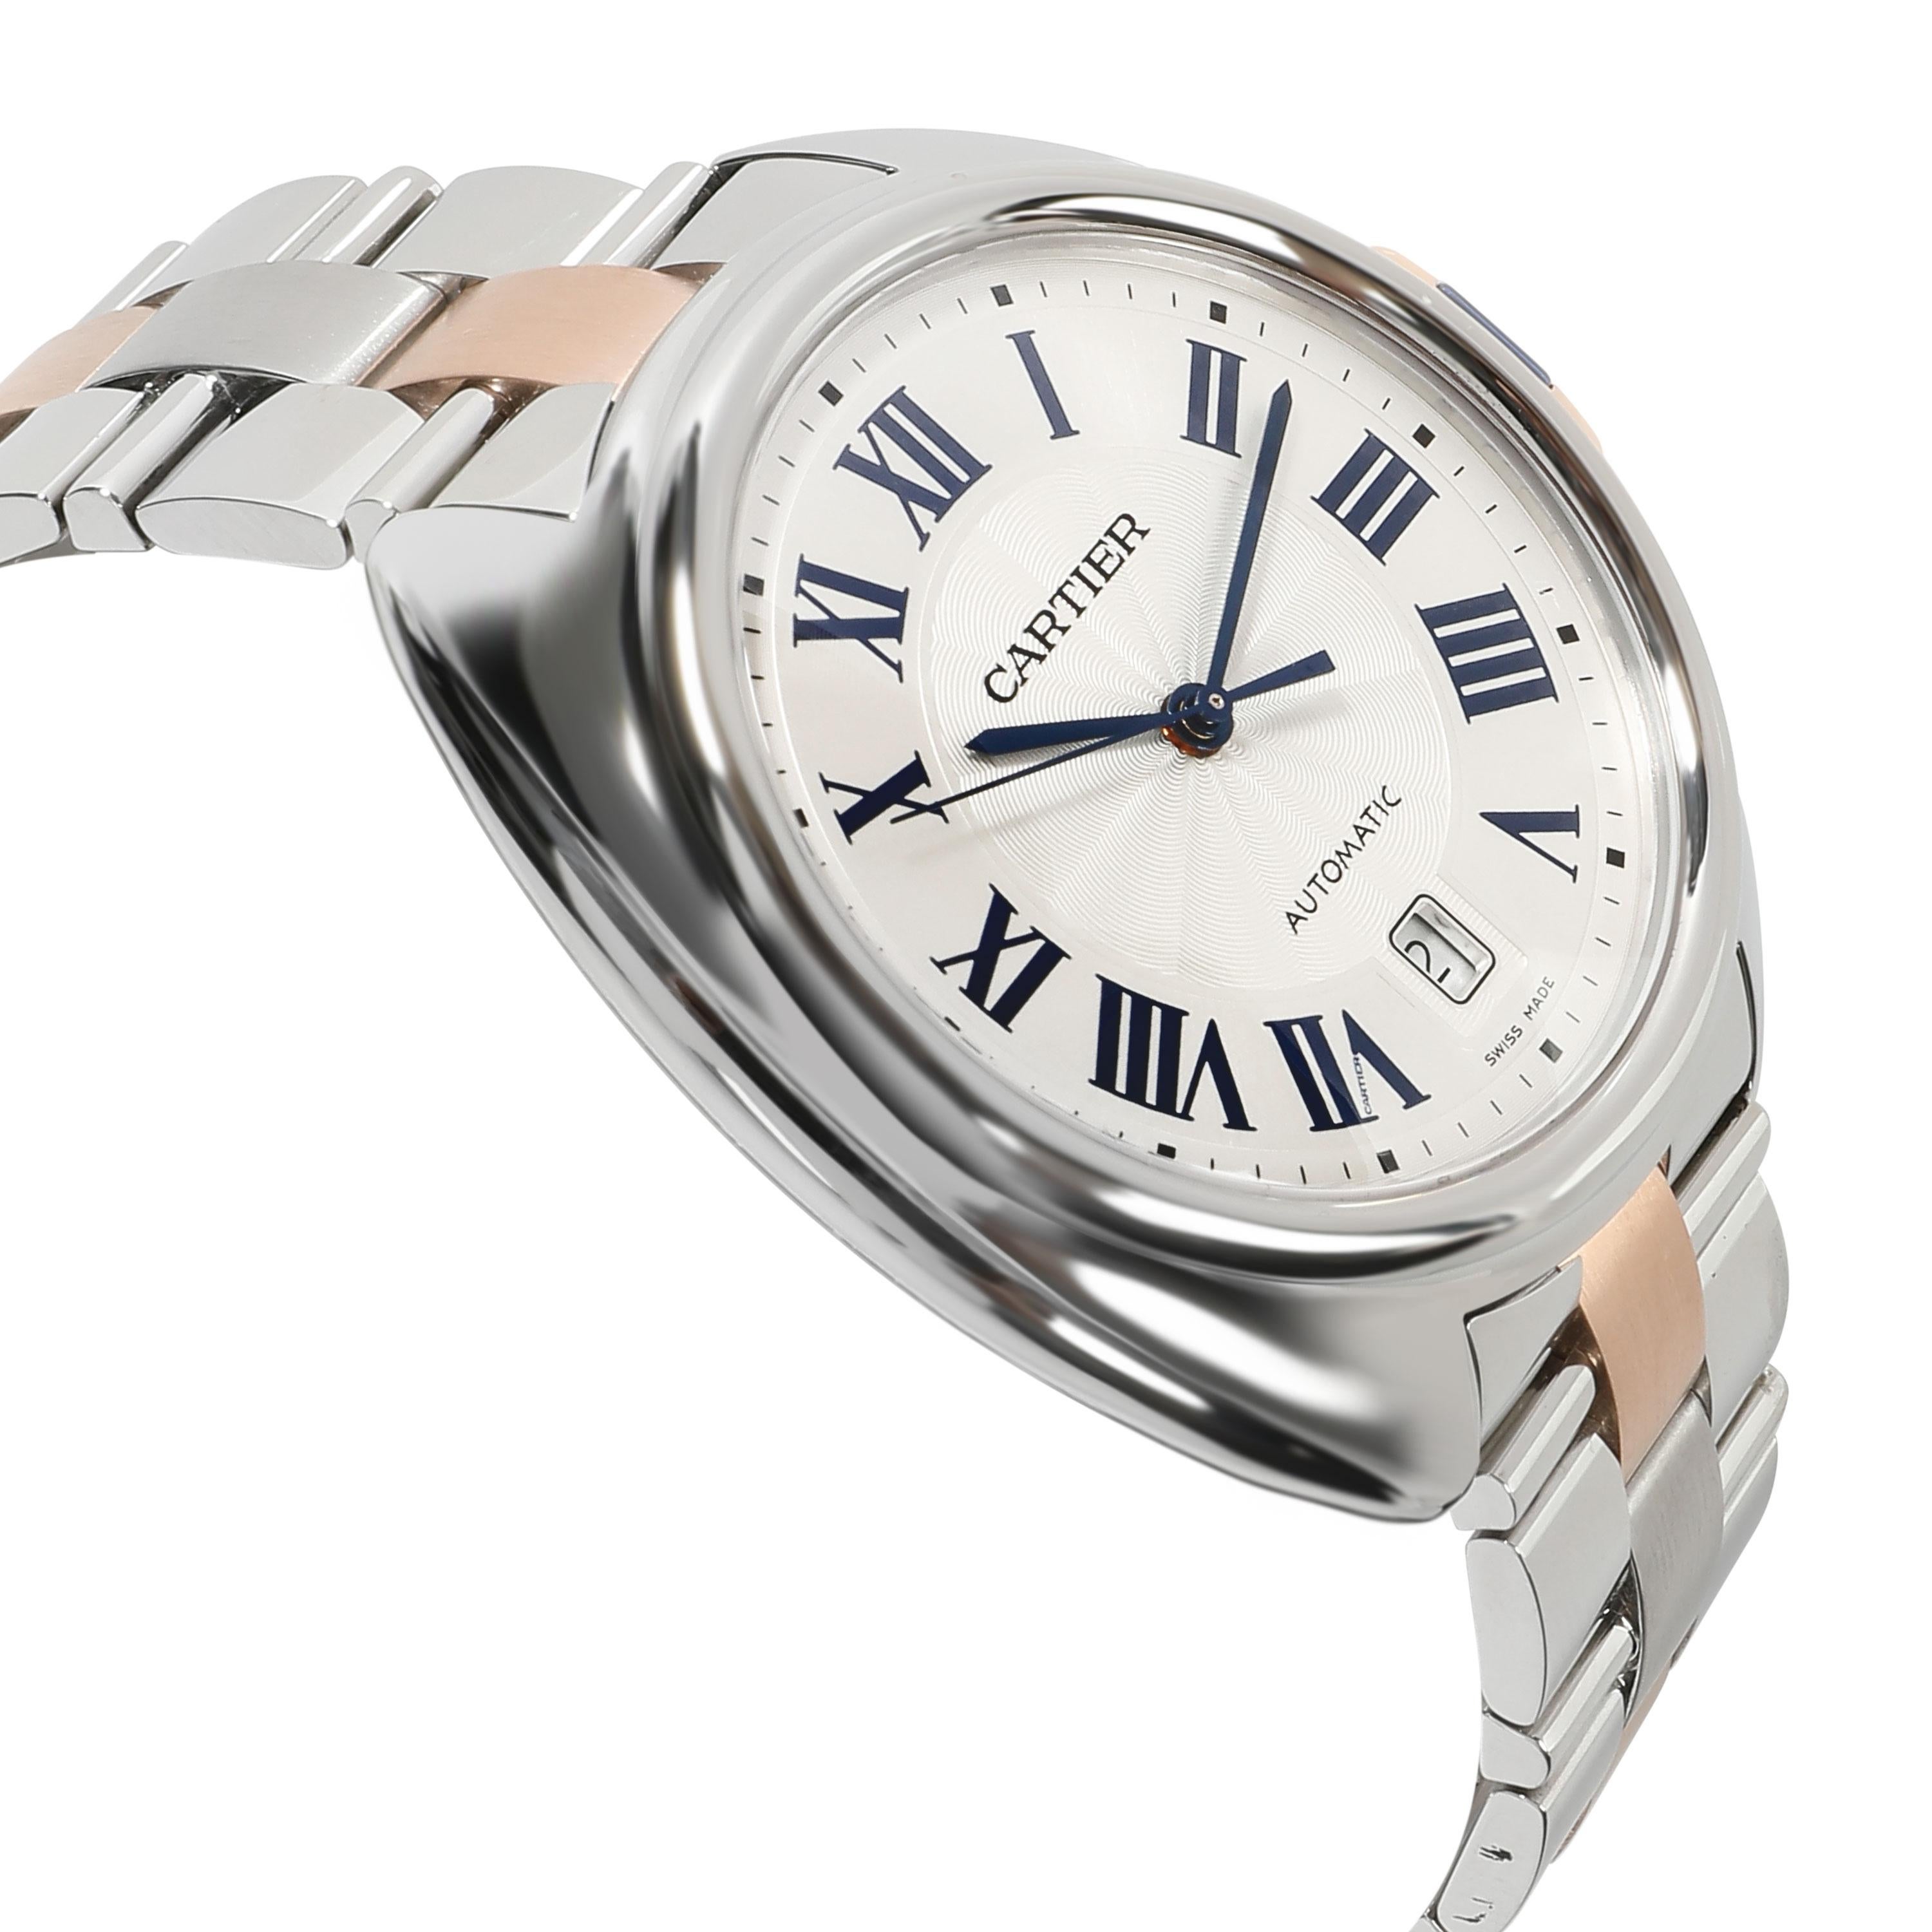 Cartier Cle de Cartier W2CL0002 Men's Watch in 18kt Stainless Steel/Rose Gold 1